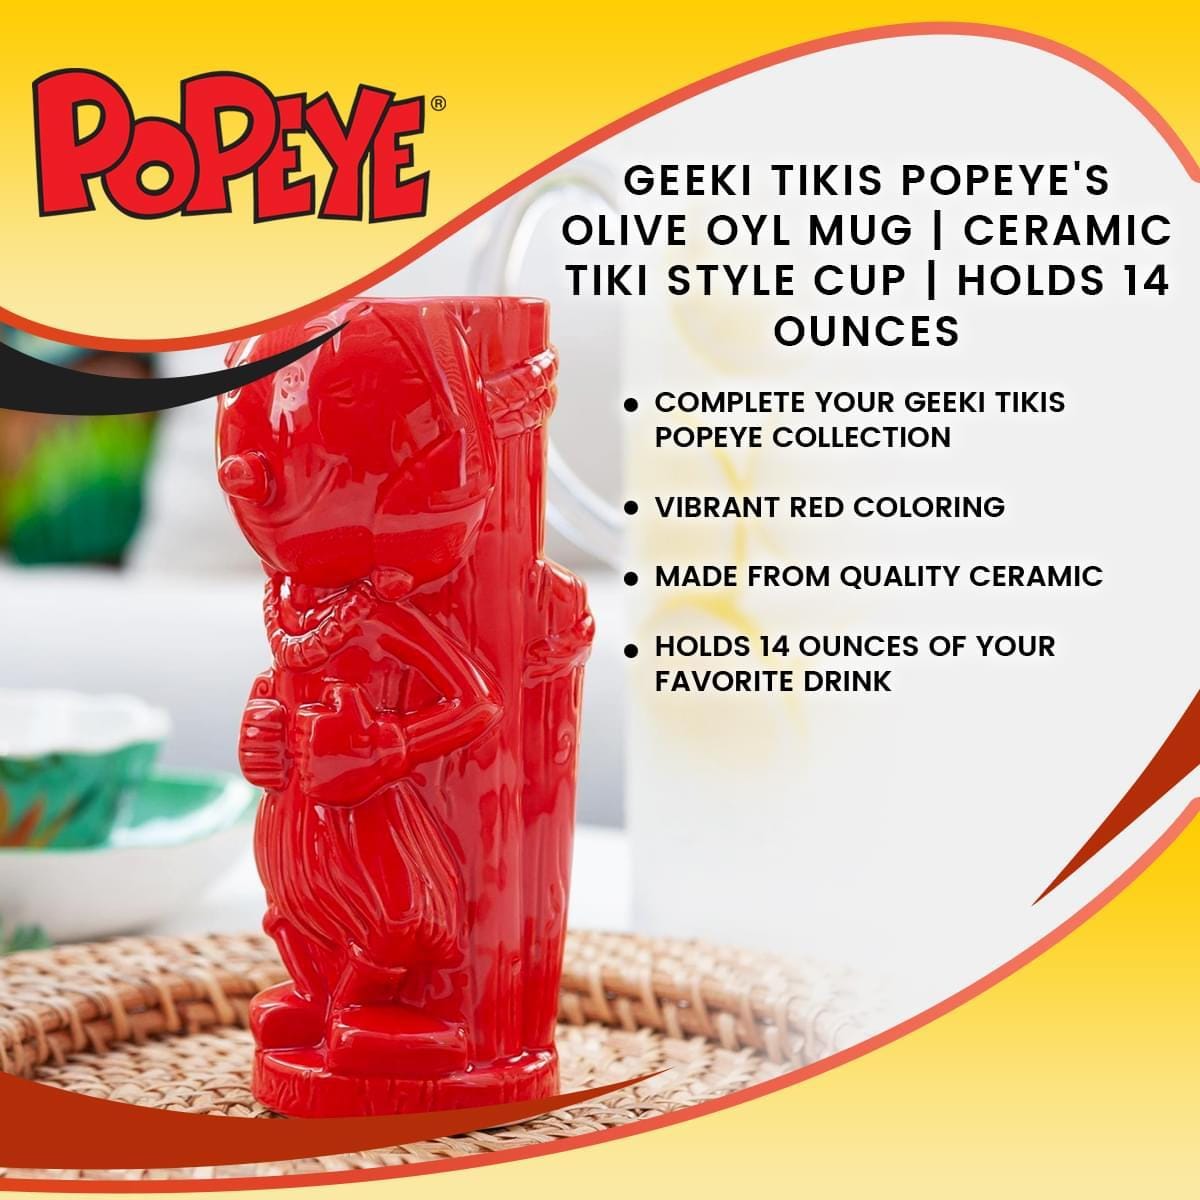 Geeki Tikis Popeye's Olive Oyl Mug | Ceramic Tiki Style Cup | Holds 14 Ounces